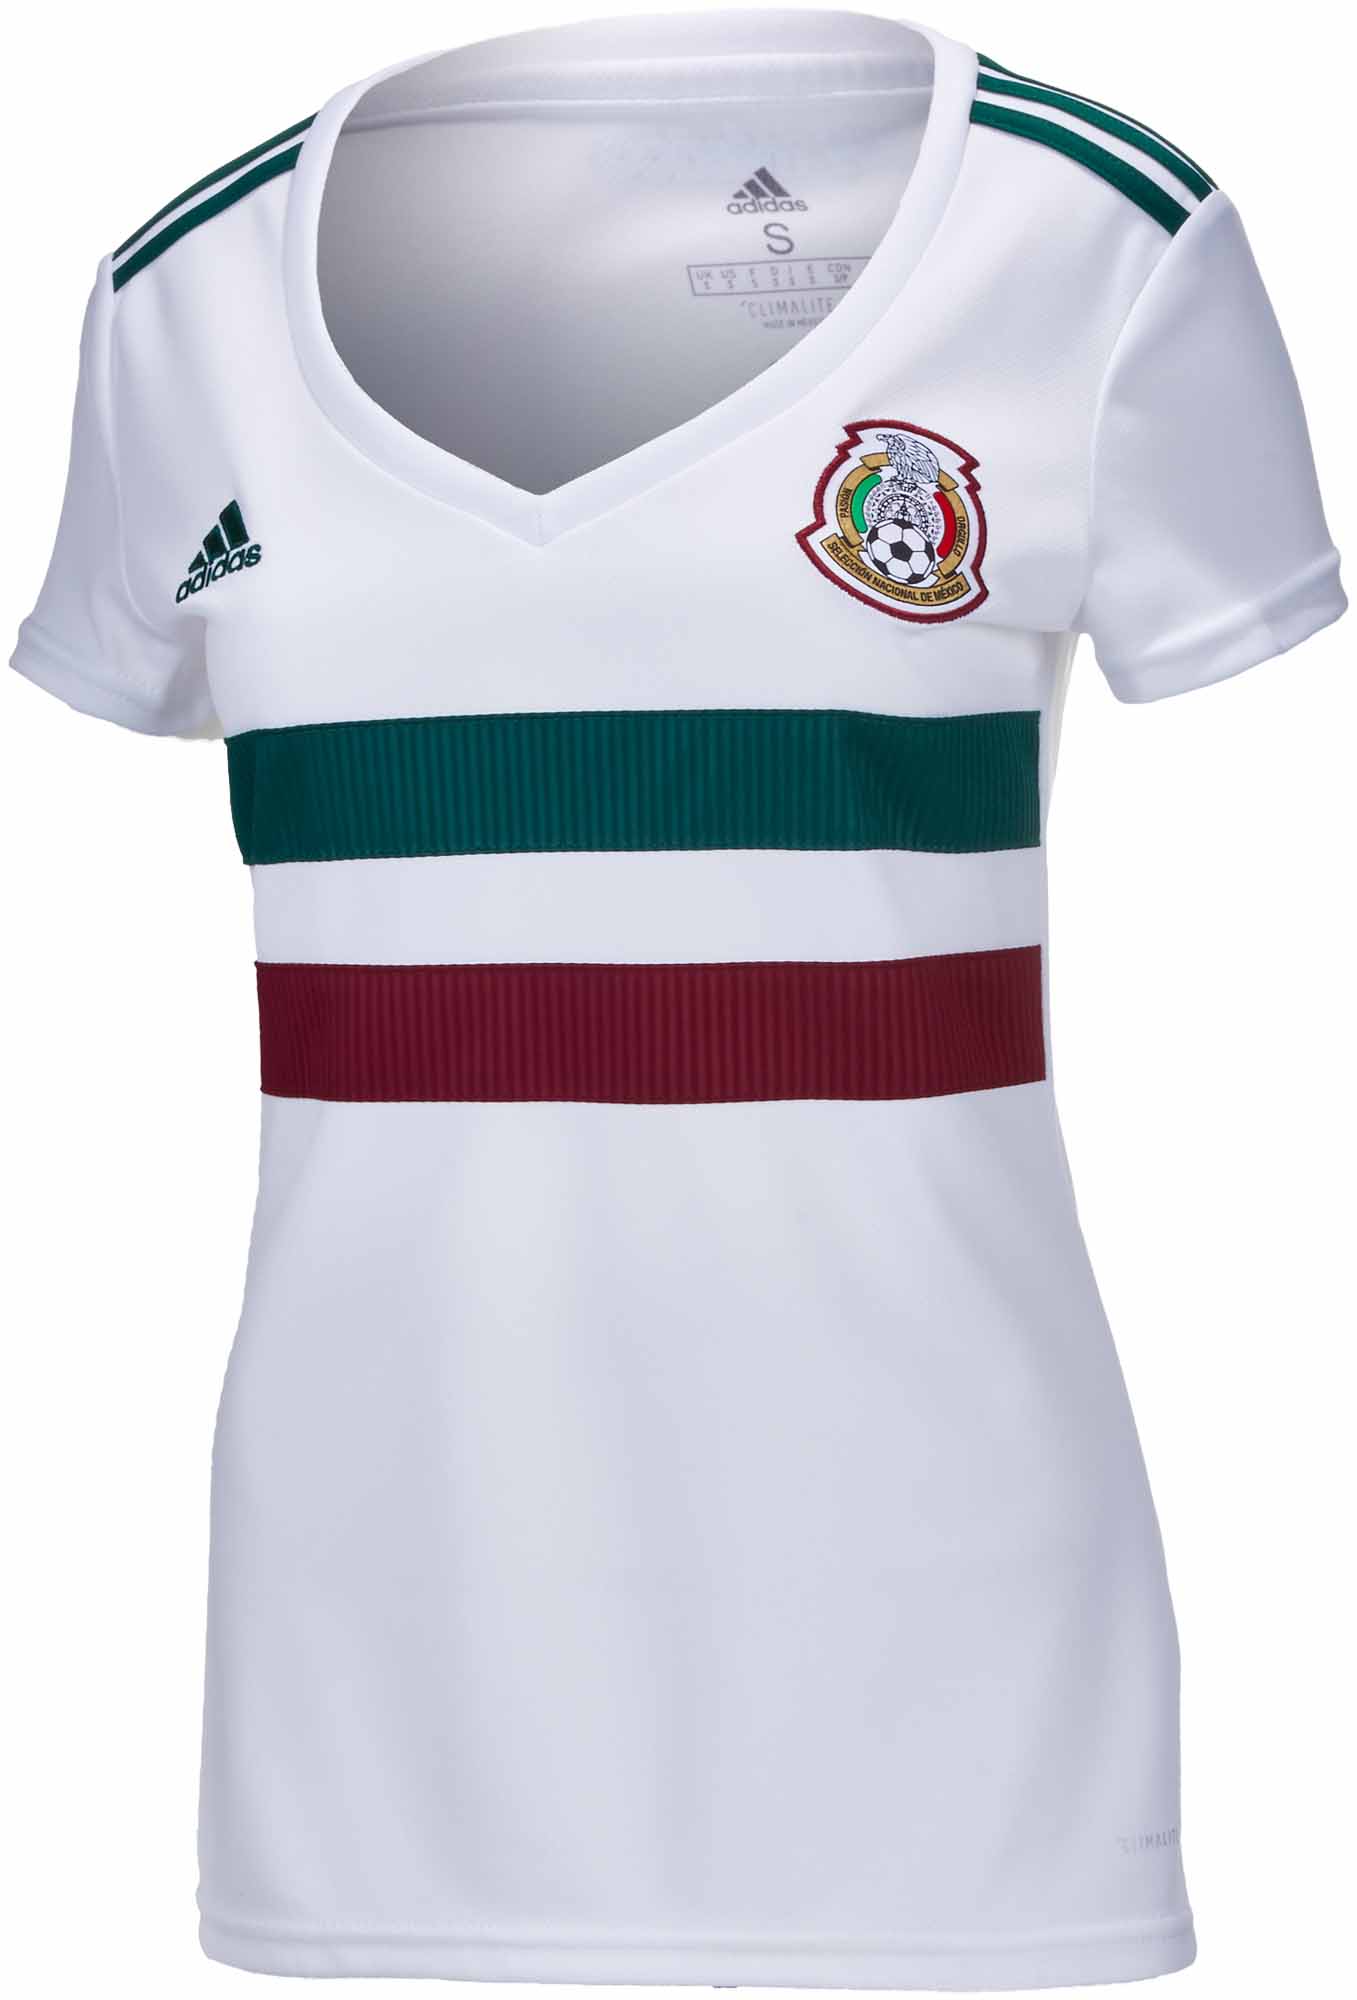 mexico soccer jersey women's